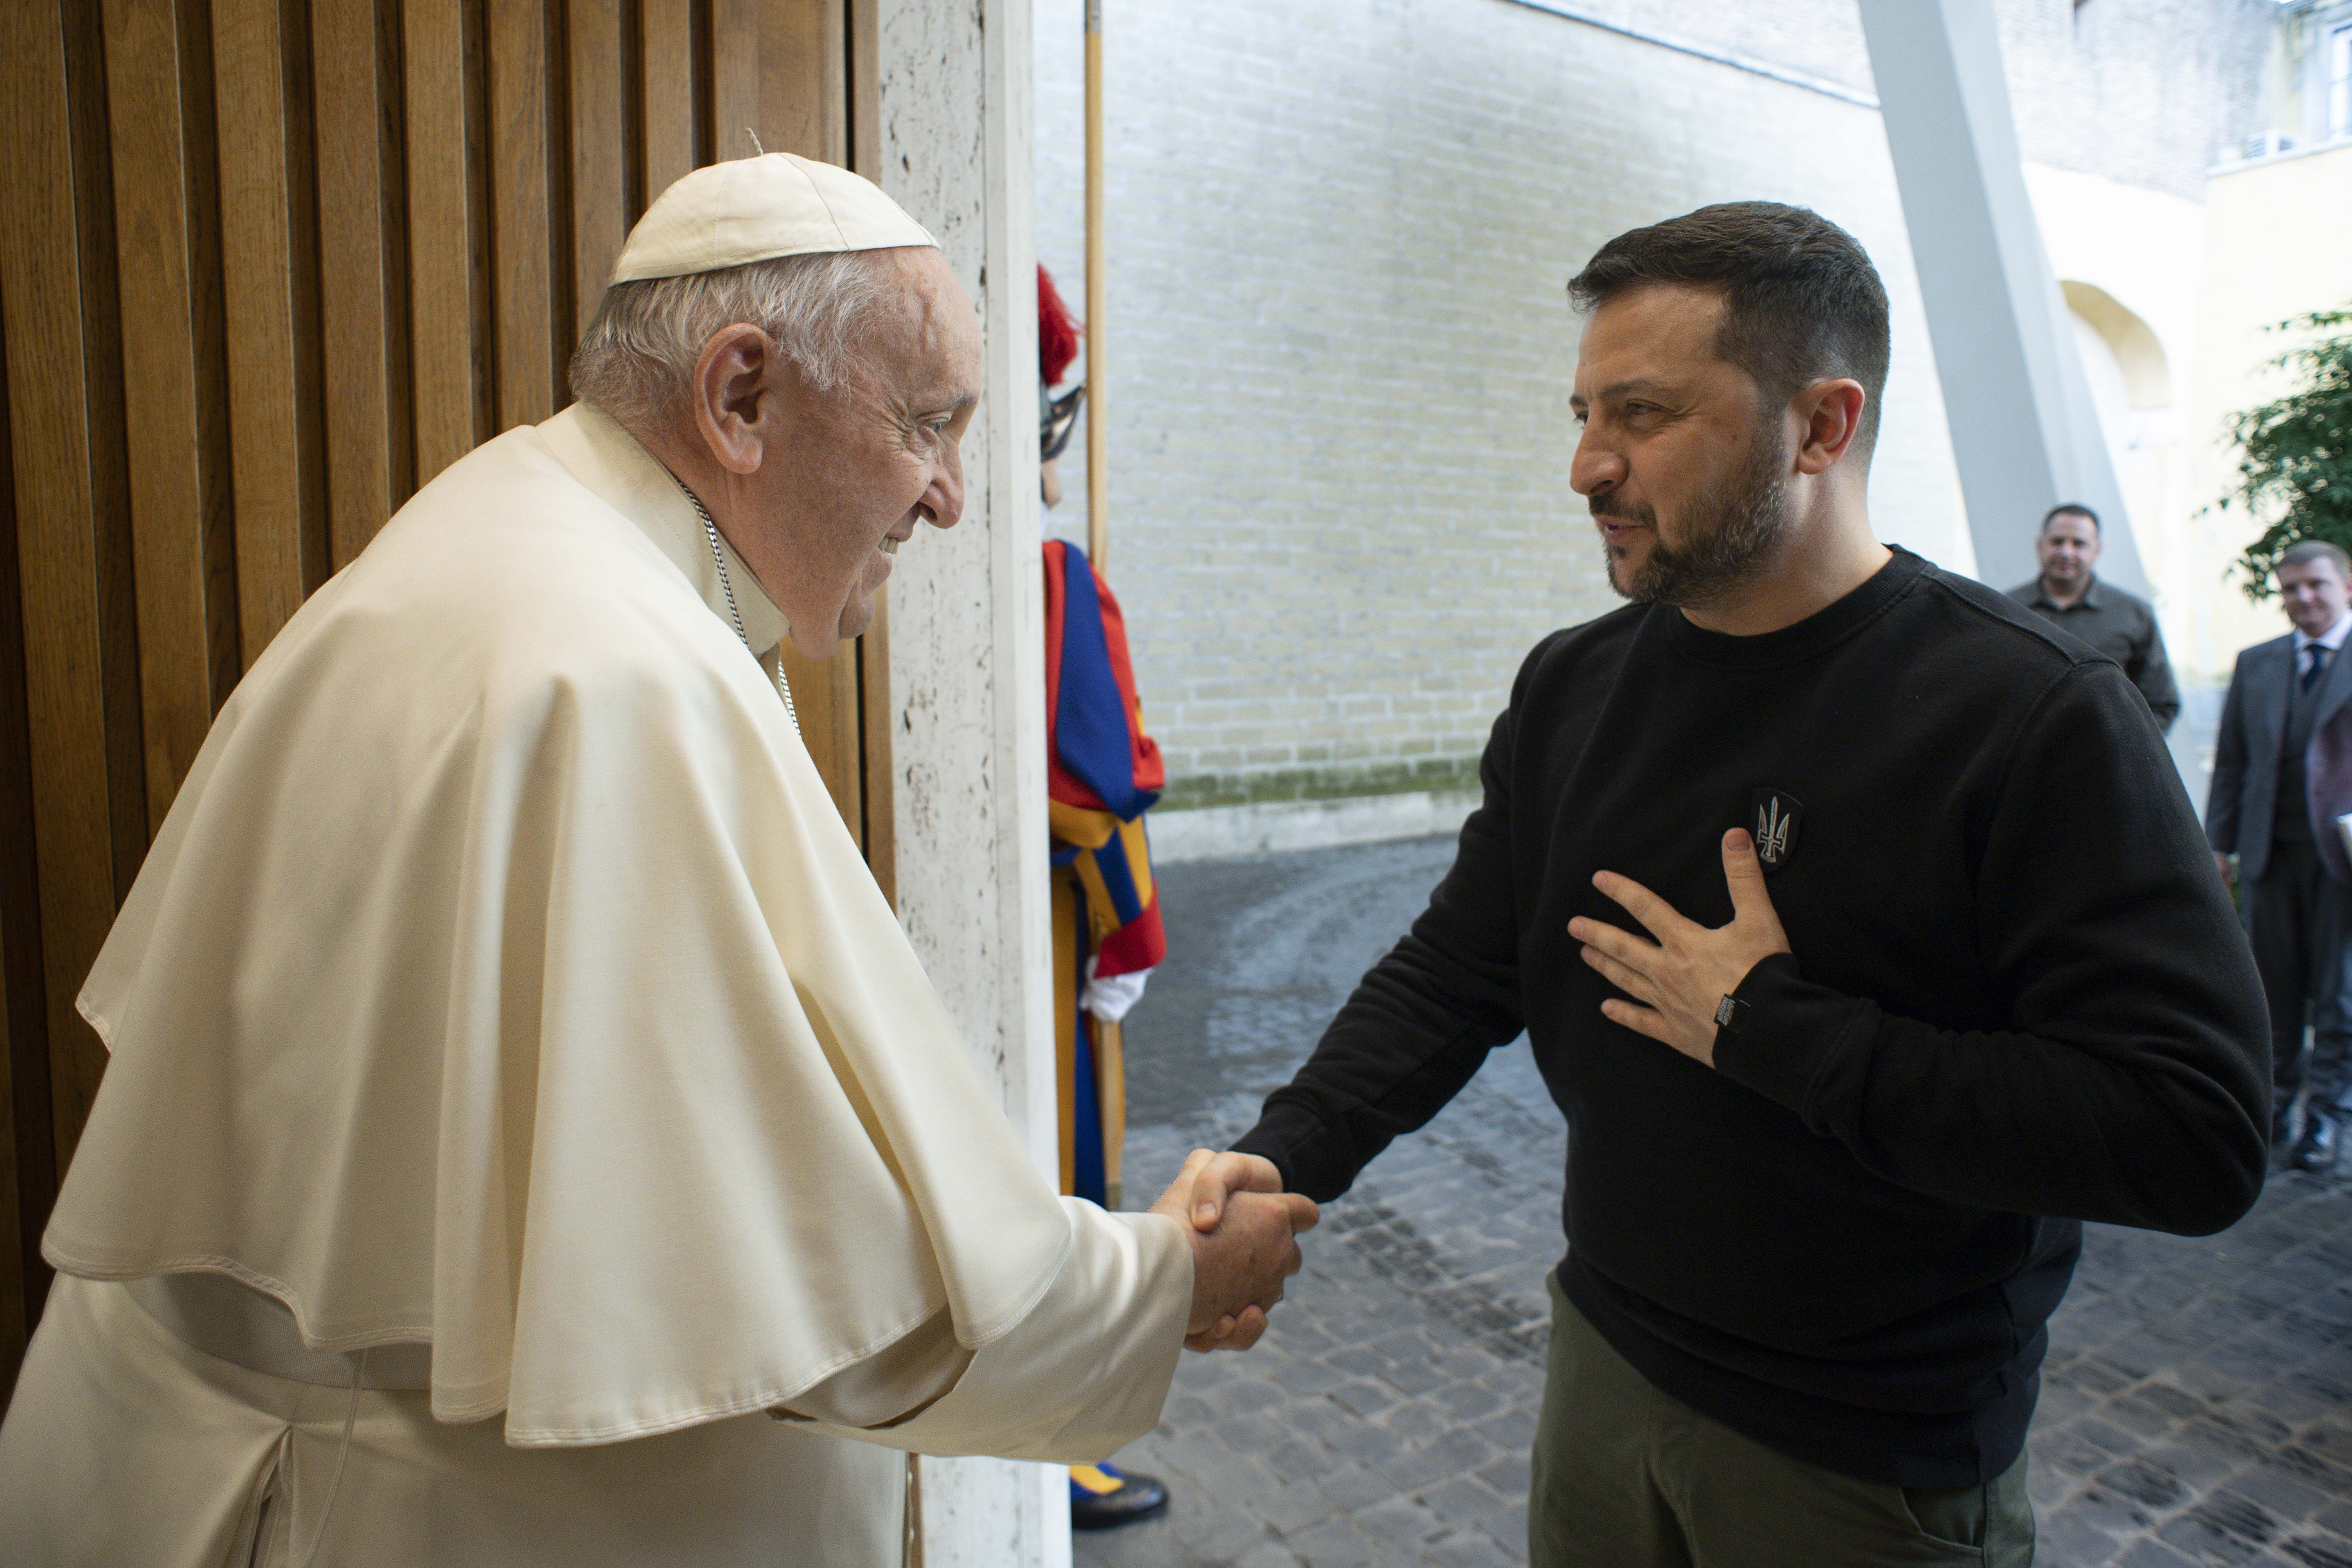 Pope Francis and Ukraine’s President Zelenskyy meet at Vatican